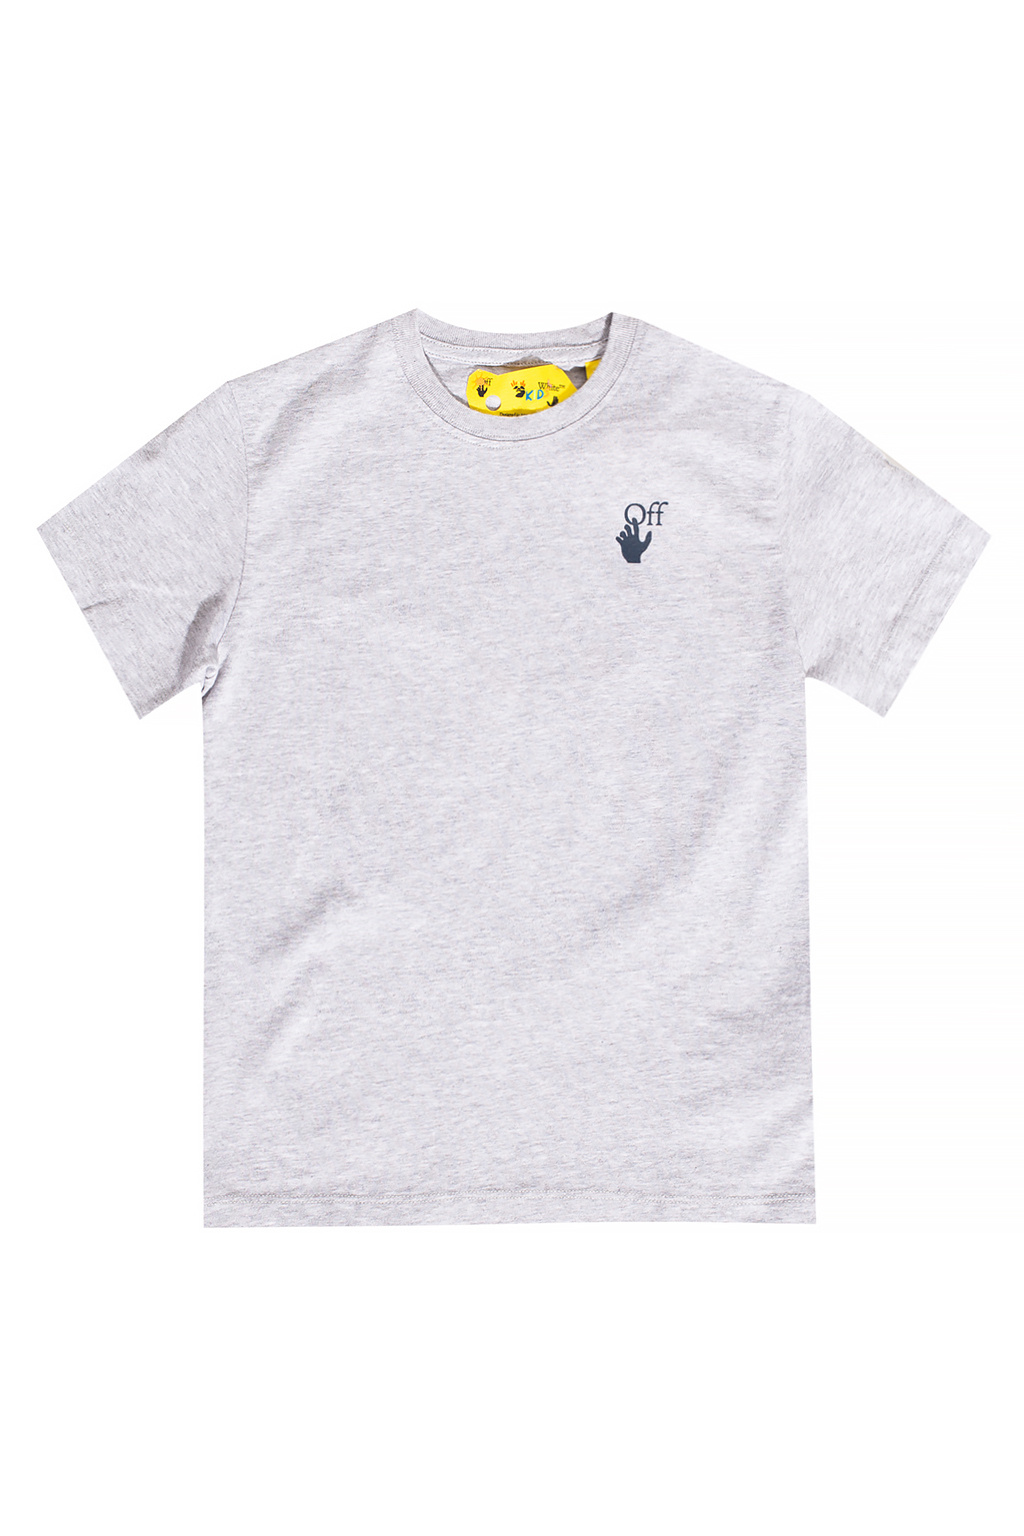 IetpShops Sweden - logo with Icon Off Kids White Scott Grey shirt T-Shirt - - Kurzarm T -